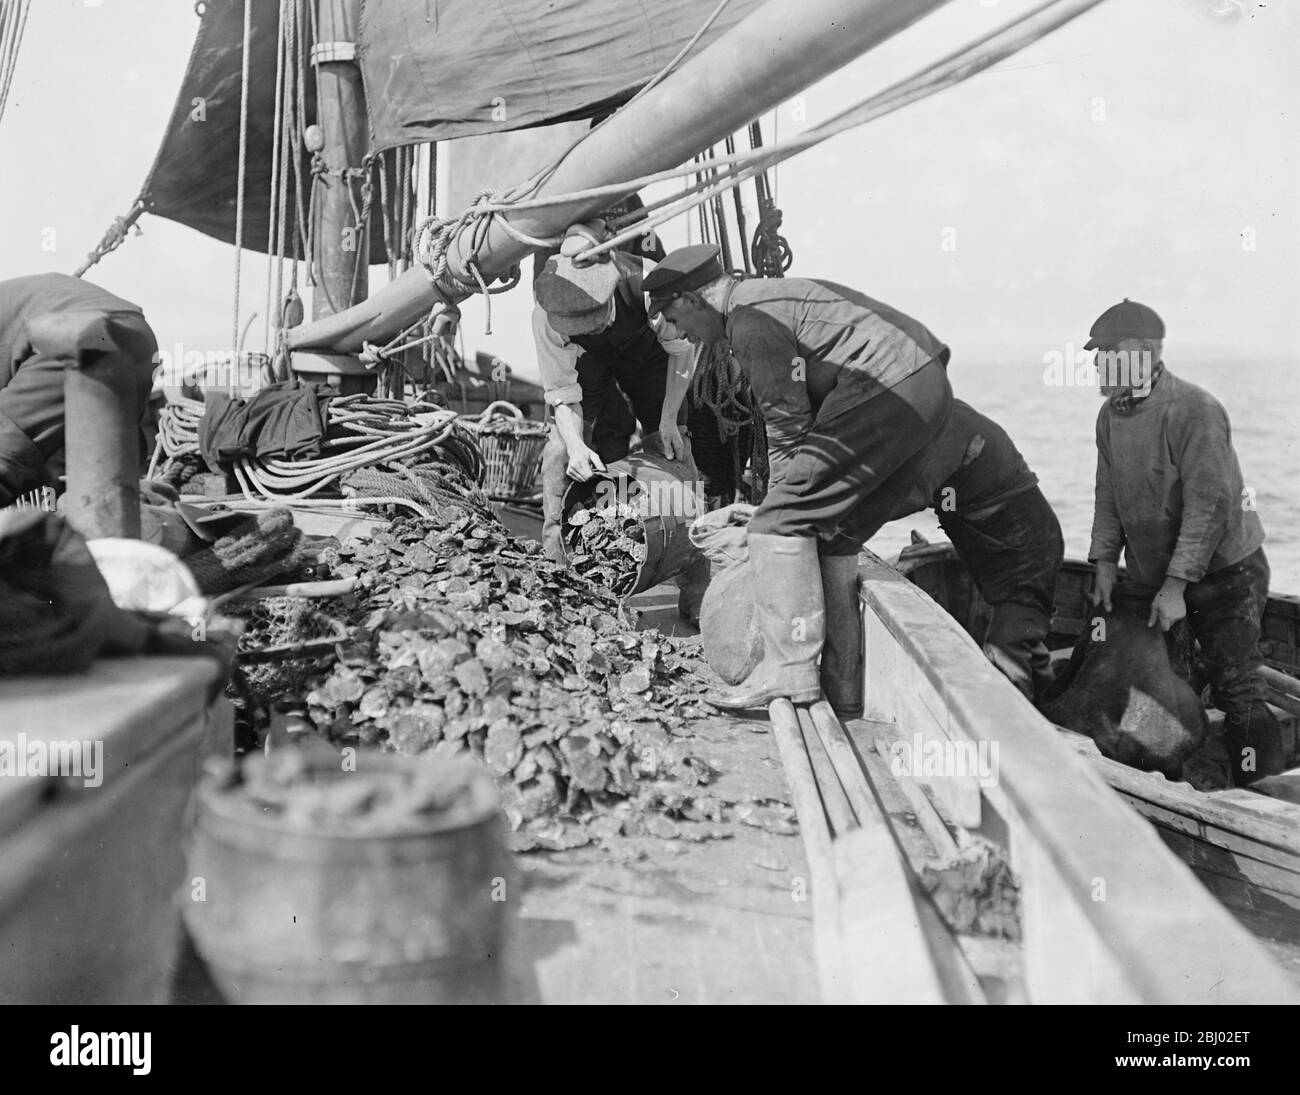 Die Eröffnung der Oyster Season - Oyster Fishing in Whitstable - 31. August 1916 Stockfoto